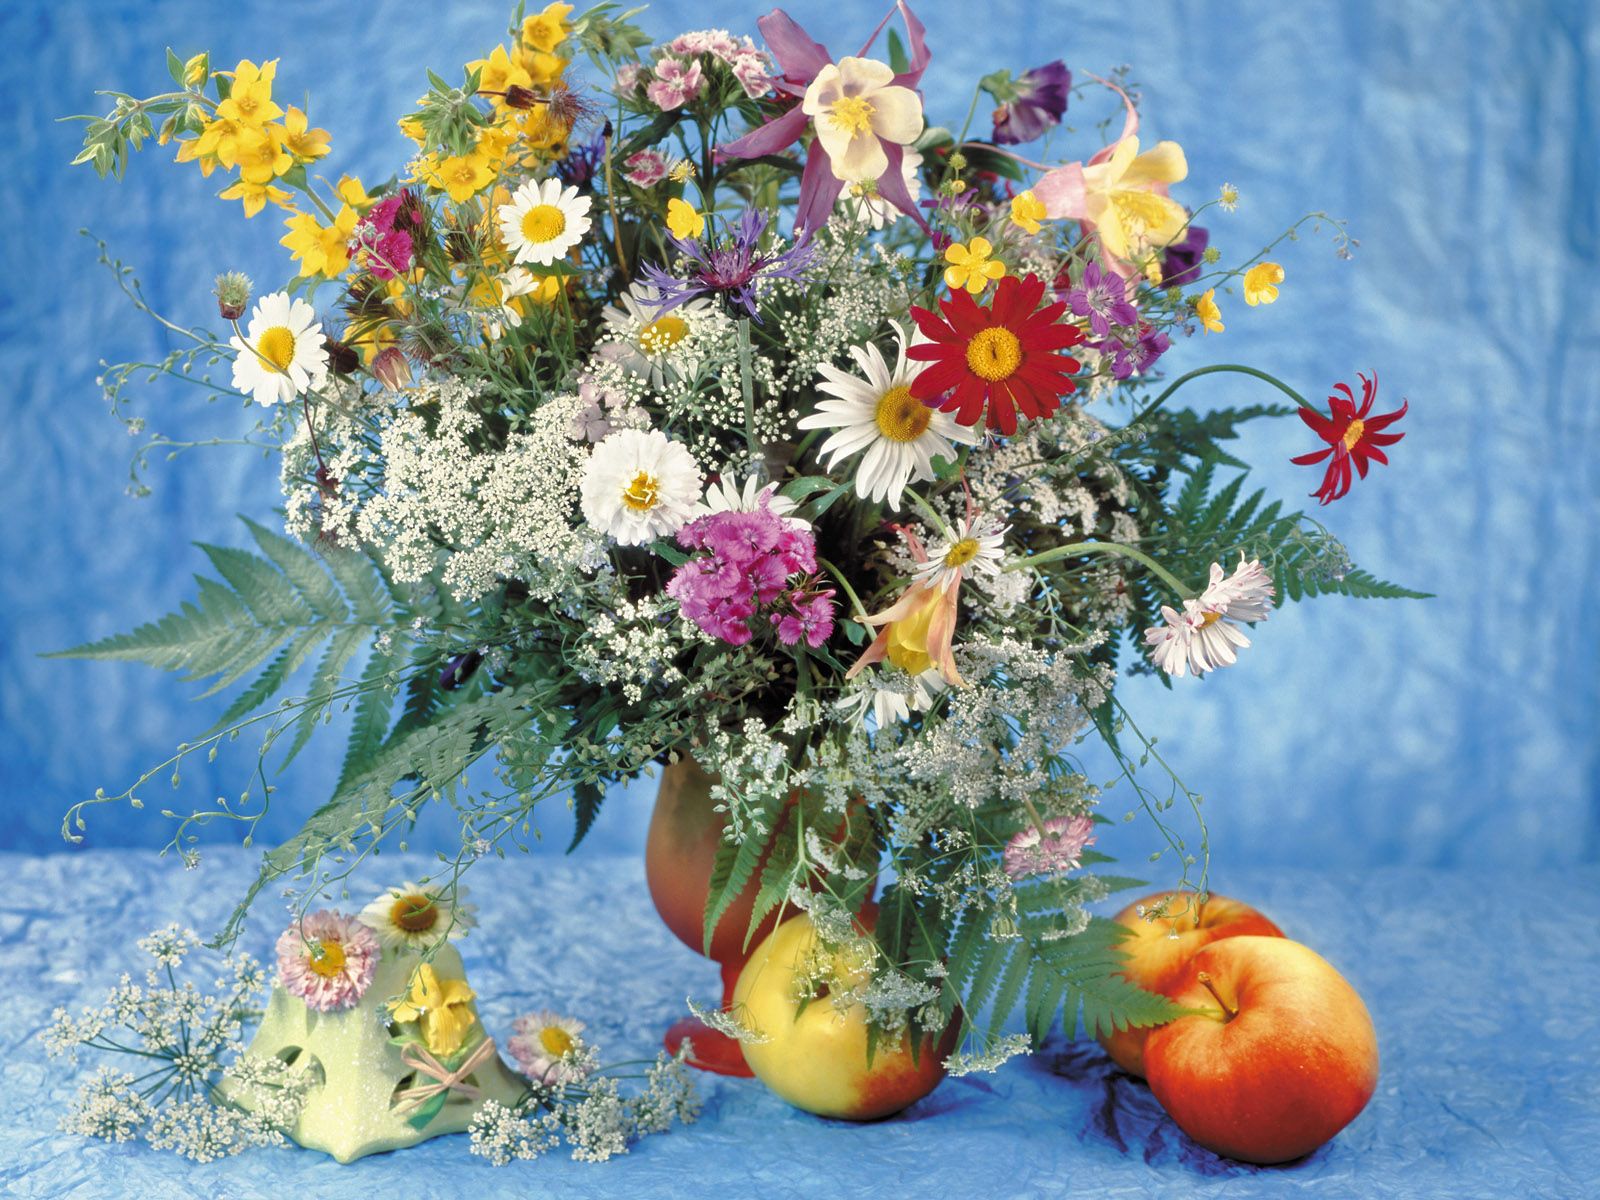 flowers, apples, bouquet, table, vase, daisies